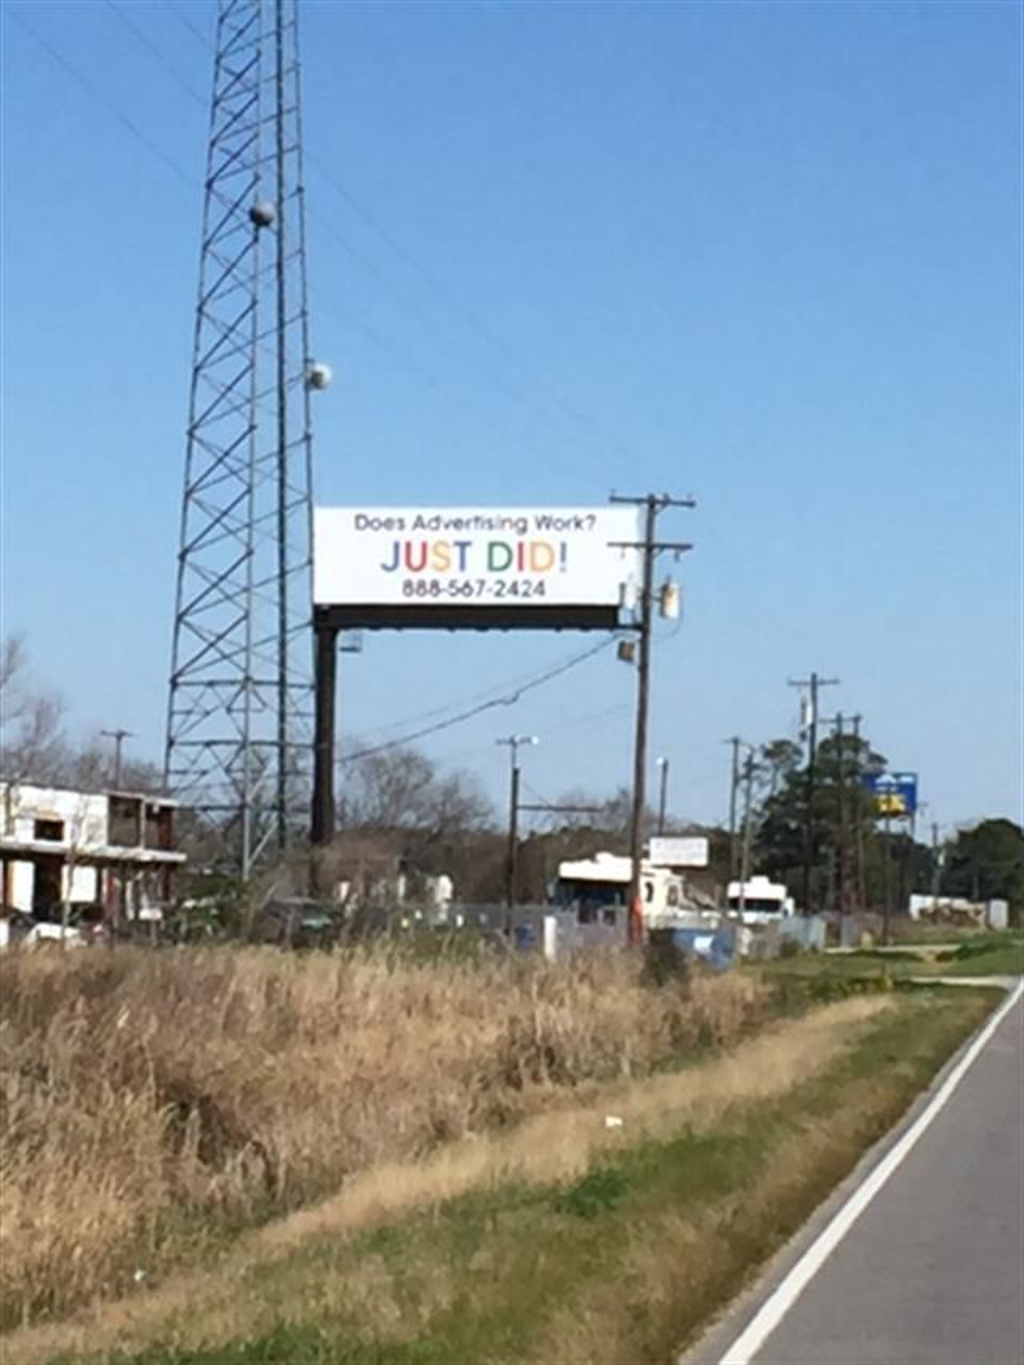 Photo of a billboard in Evangeline